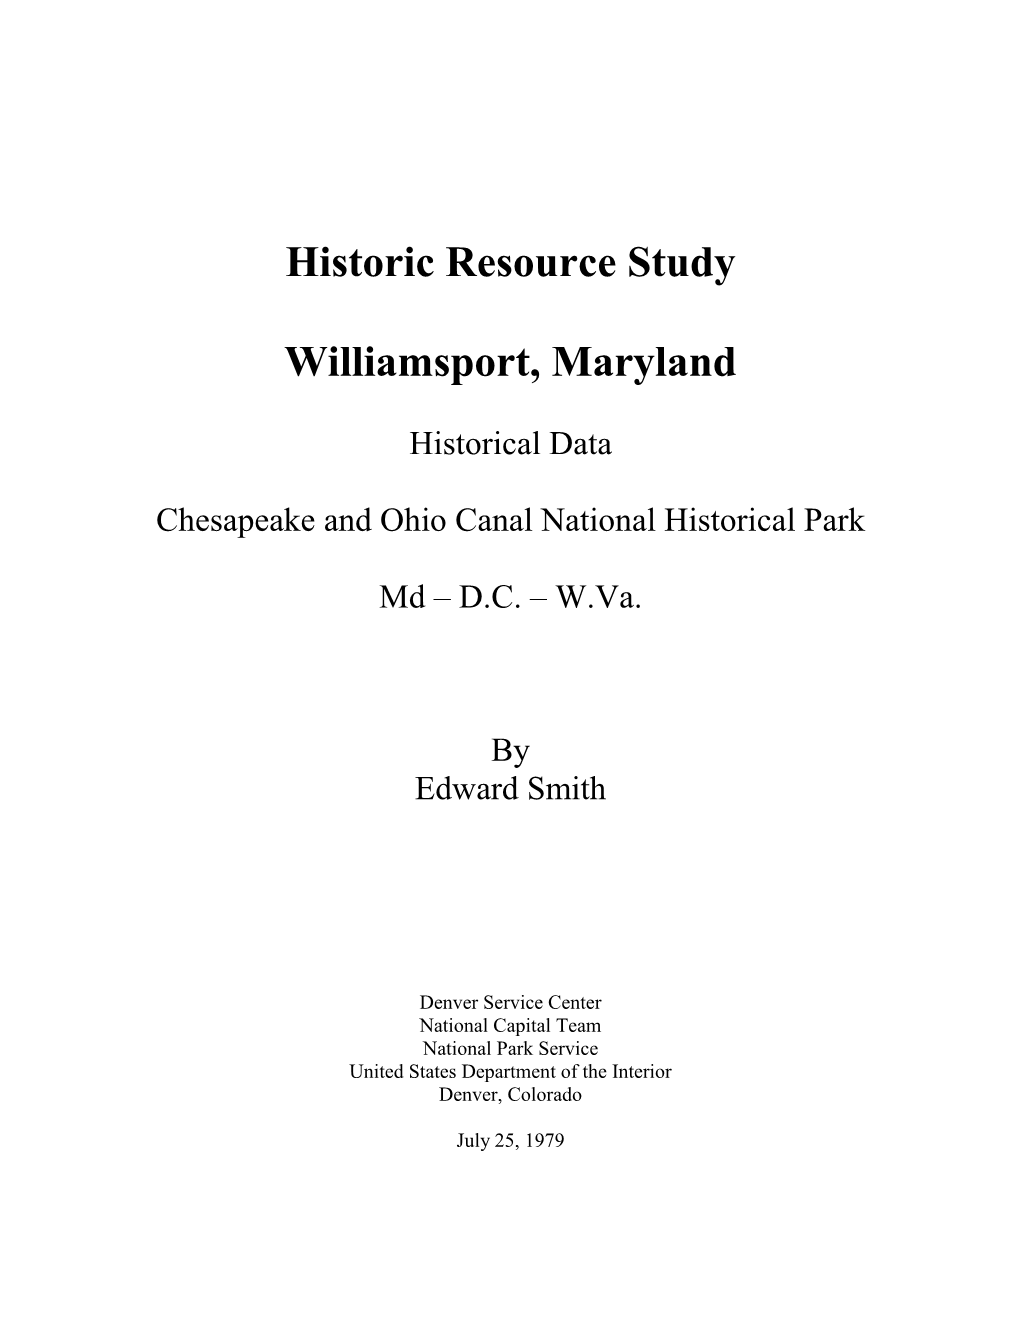 Historic Resource Study: Williamsport, Maryland